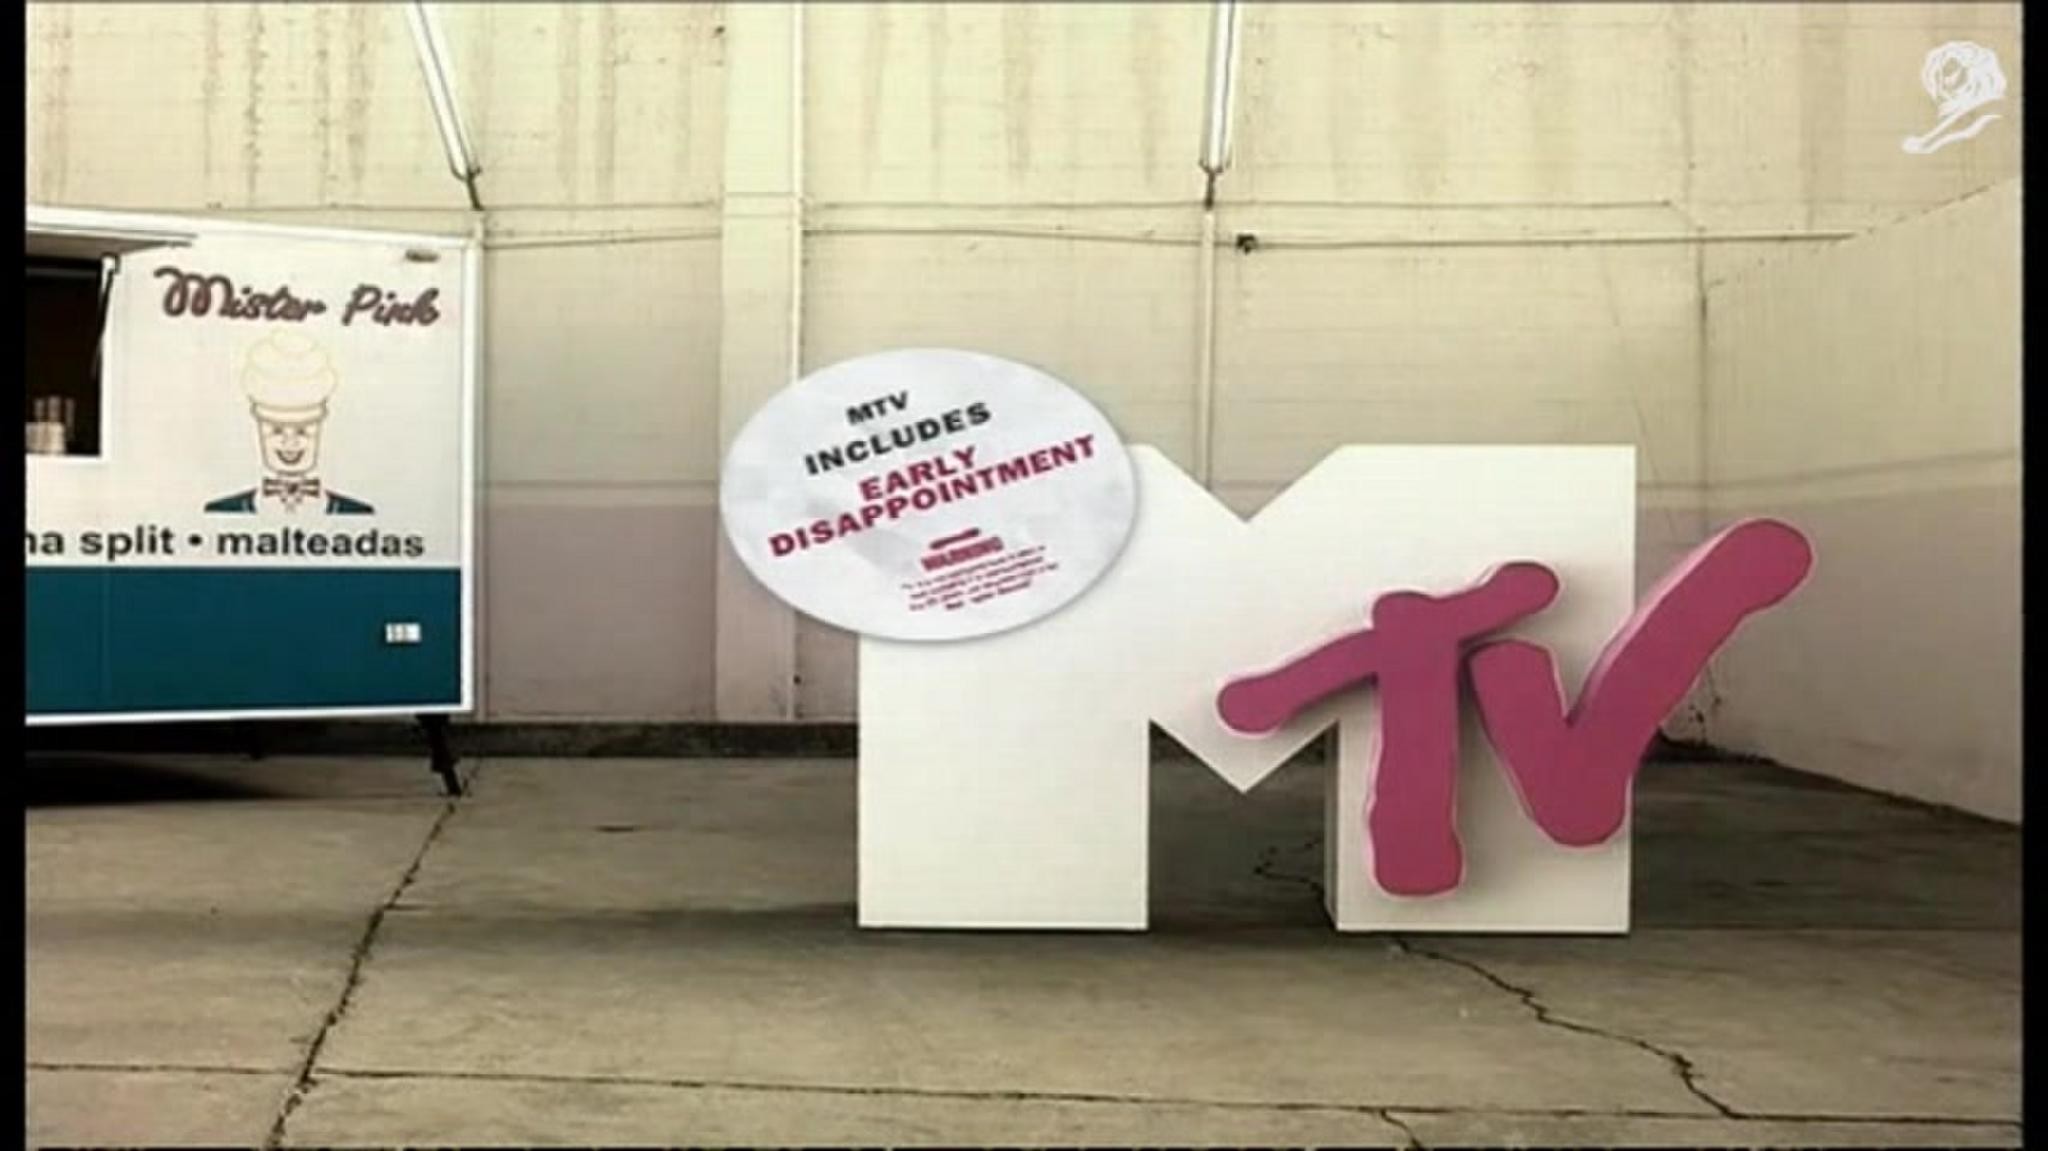 MTV CHANNEL